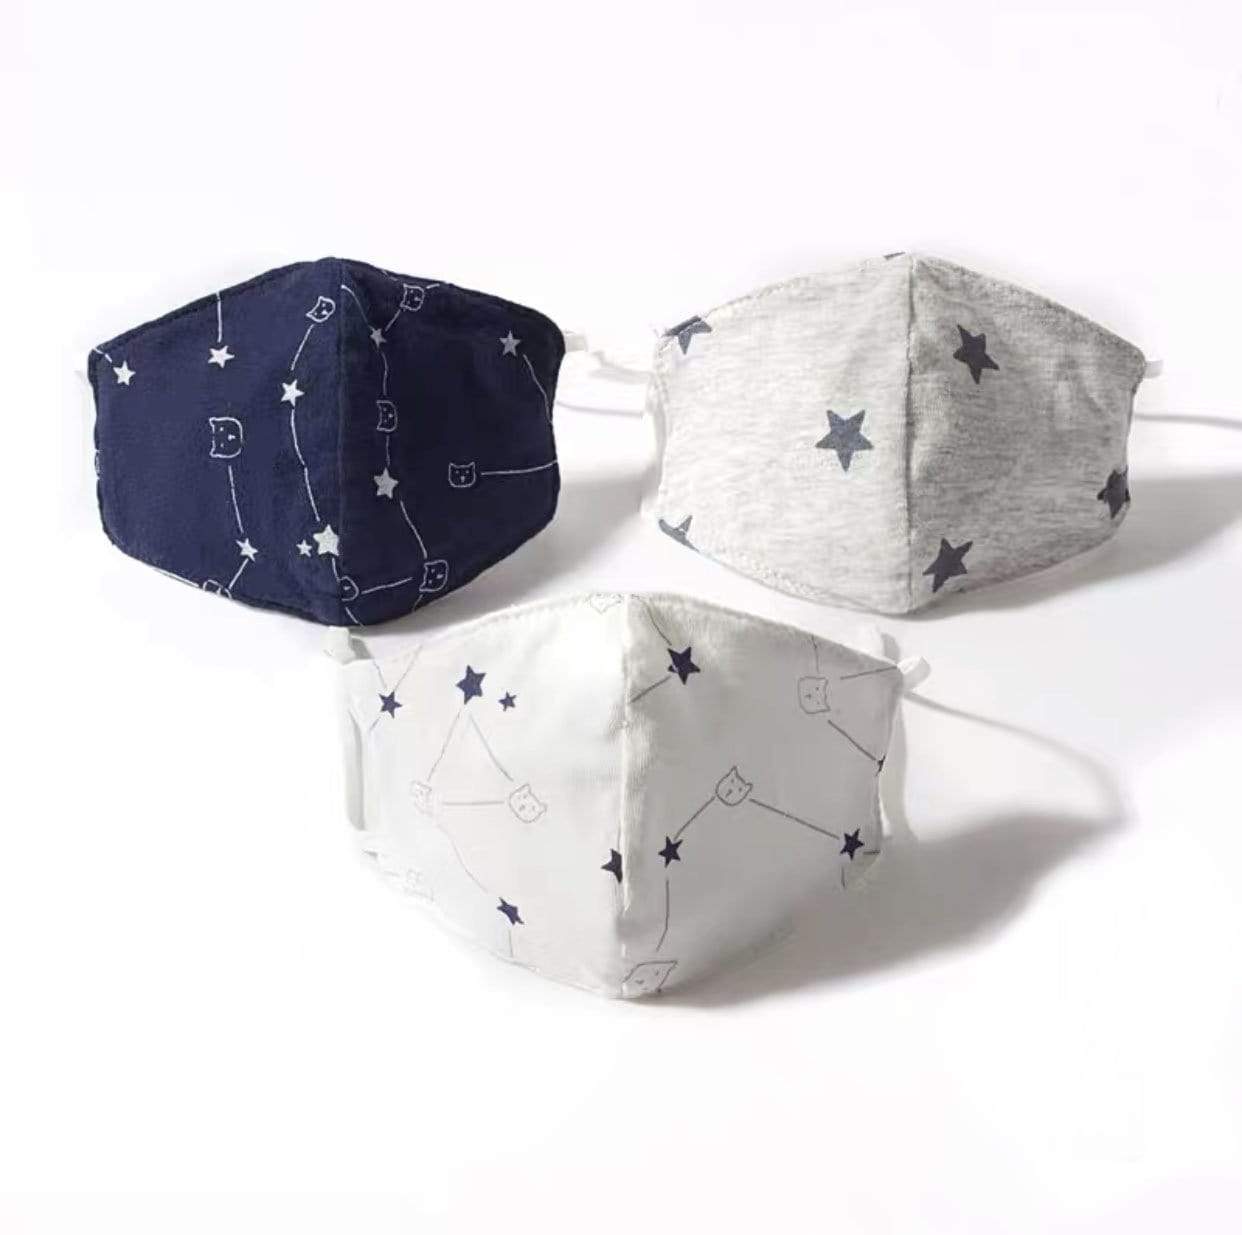 Helms Store Masks Astro Stars Reusable & Adjustable Kids Face Mask with no filter pocket (Age 2-18)